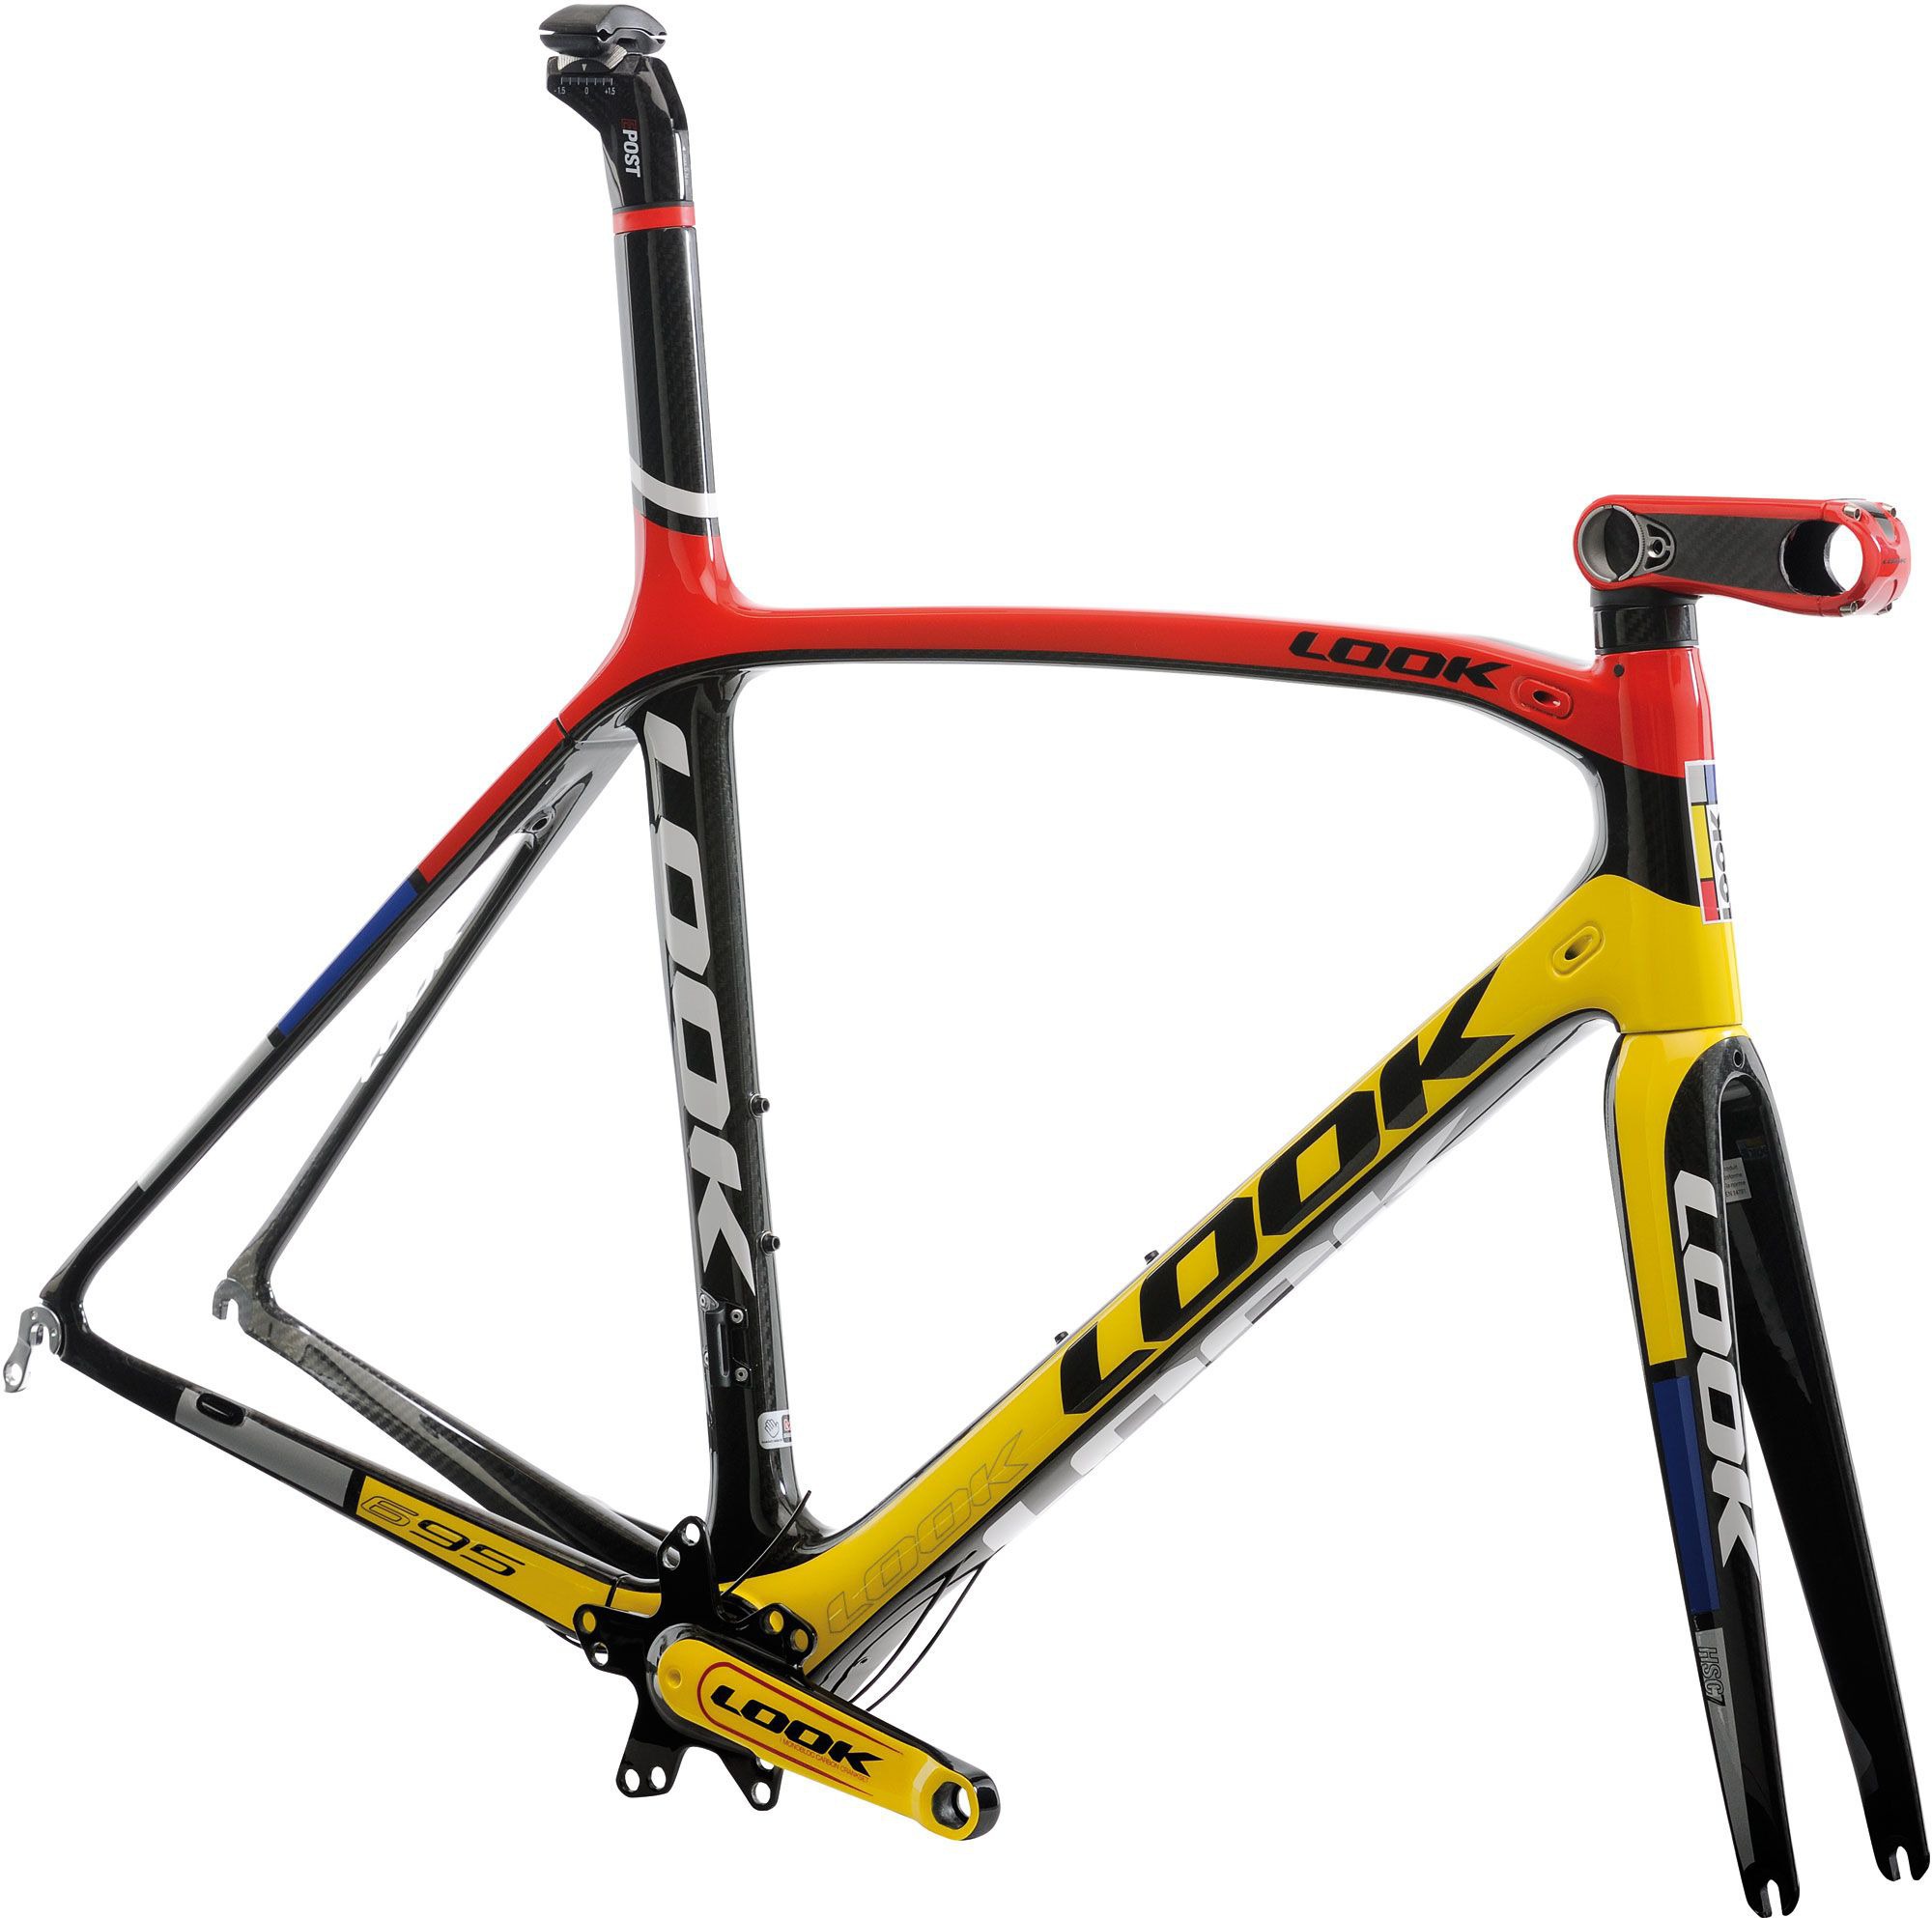 2011 Look 695 Sr Premium I Pack Bicycle Details Bicyclebluebook Com